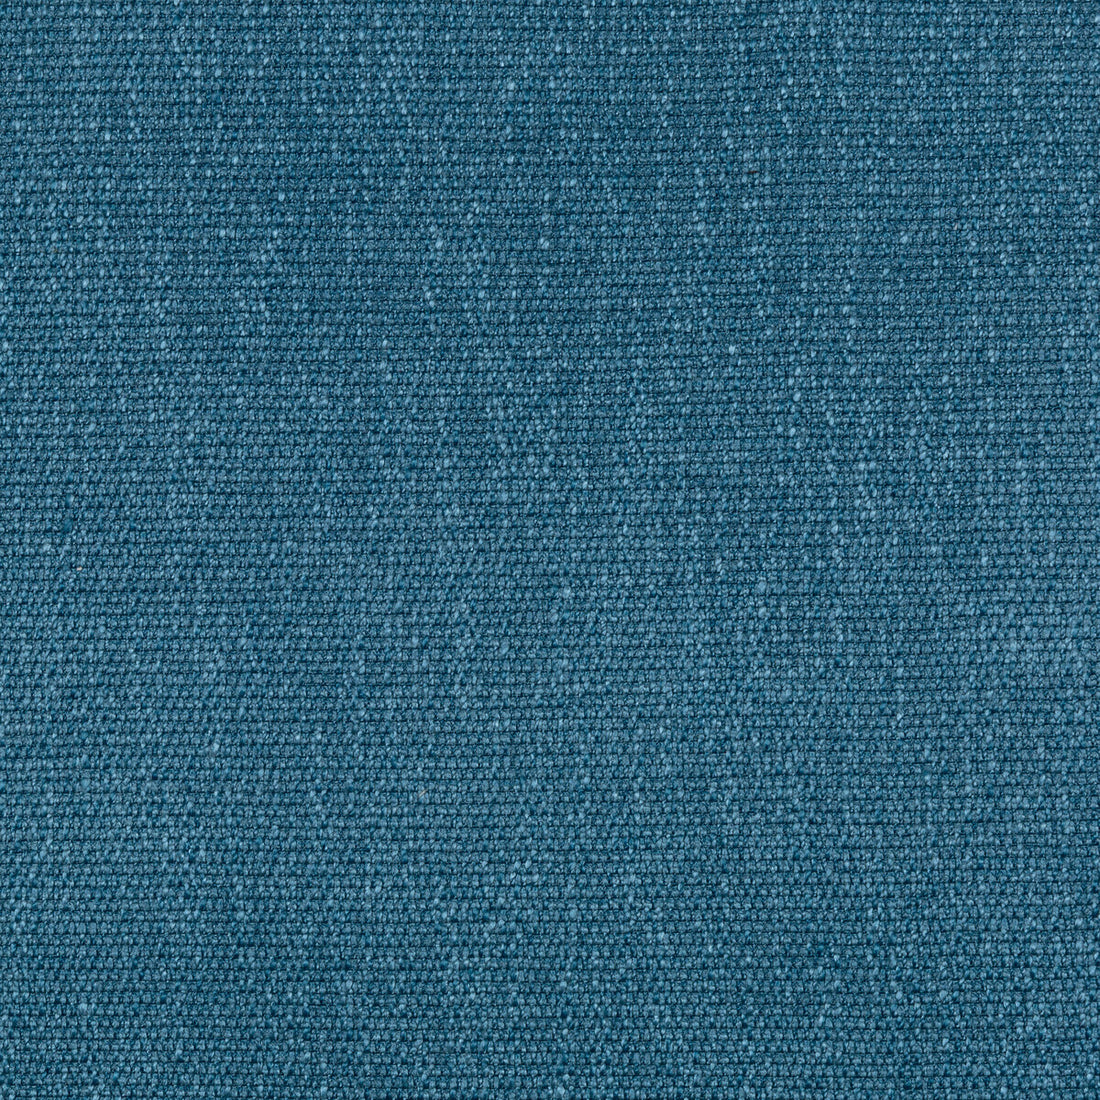 Kravet Smart fabric in 35943-5 color - pattern 35943.5.0 - by Kravet Smart in the Performance Kravetarmor collection